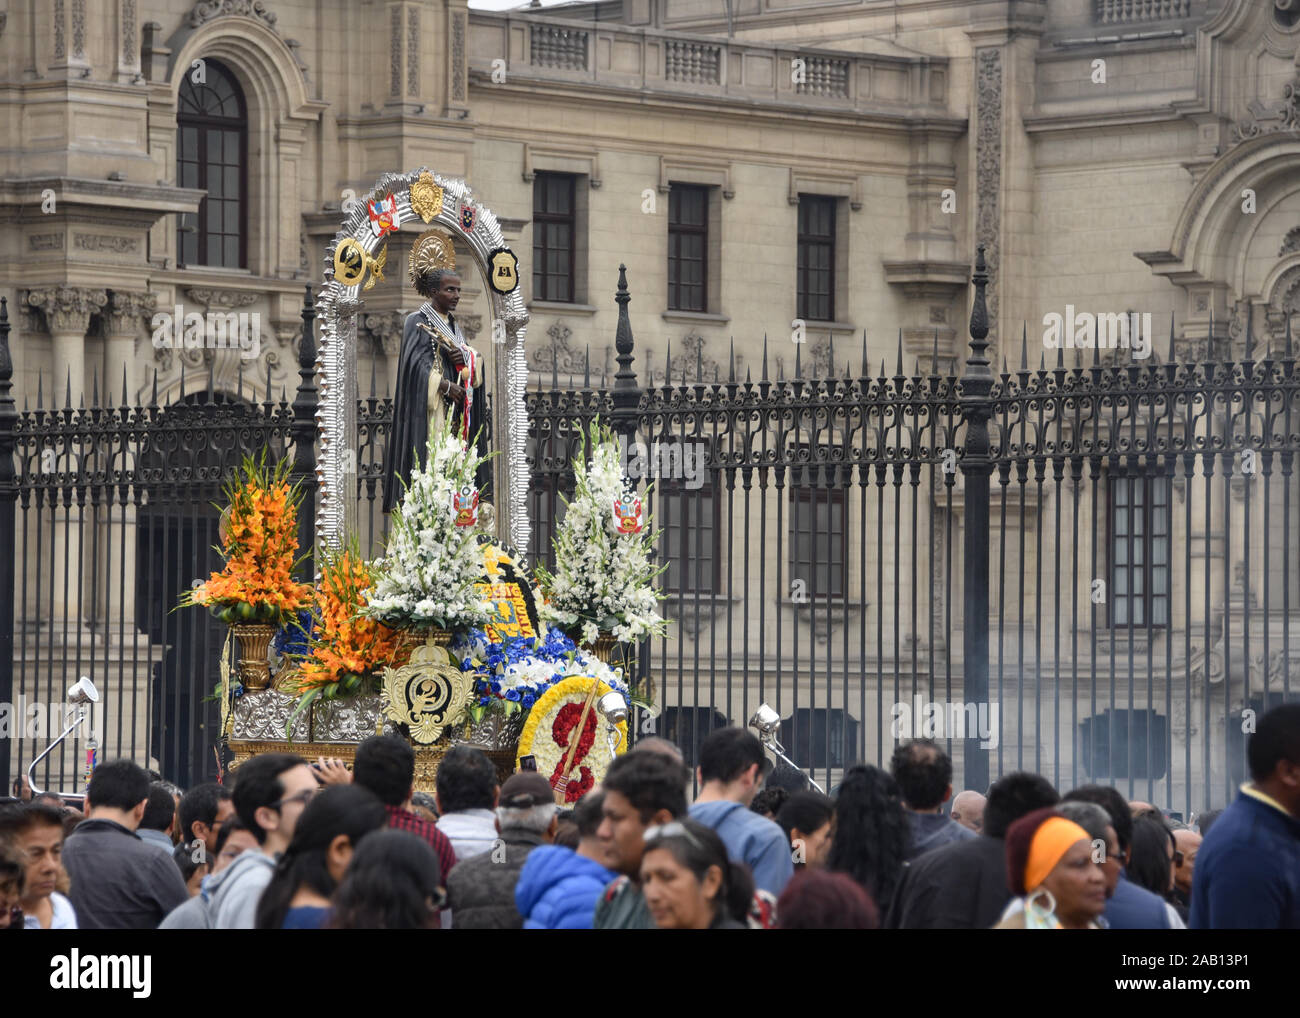 Lima, Peru - Nov 17, 2019: Crowds attend the procession for San Martin de Porres in Lima's main square Stock Photo